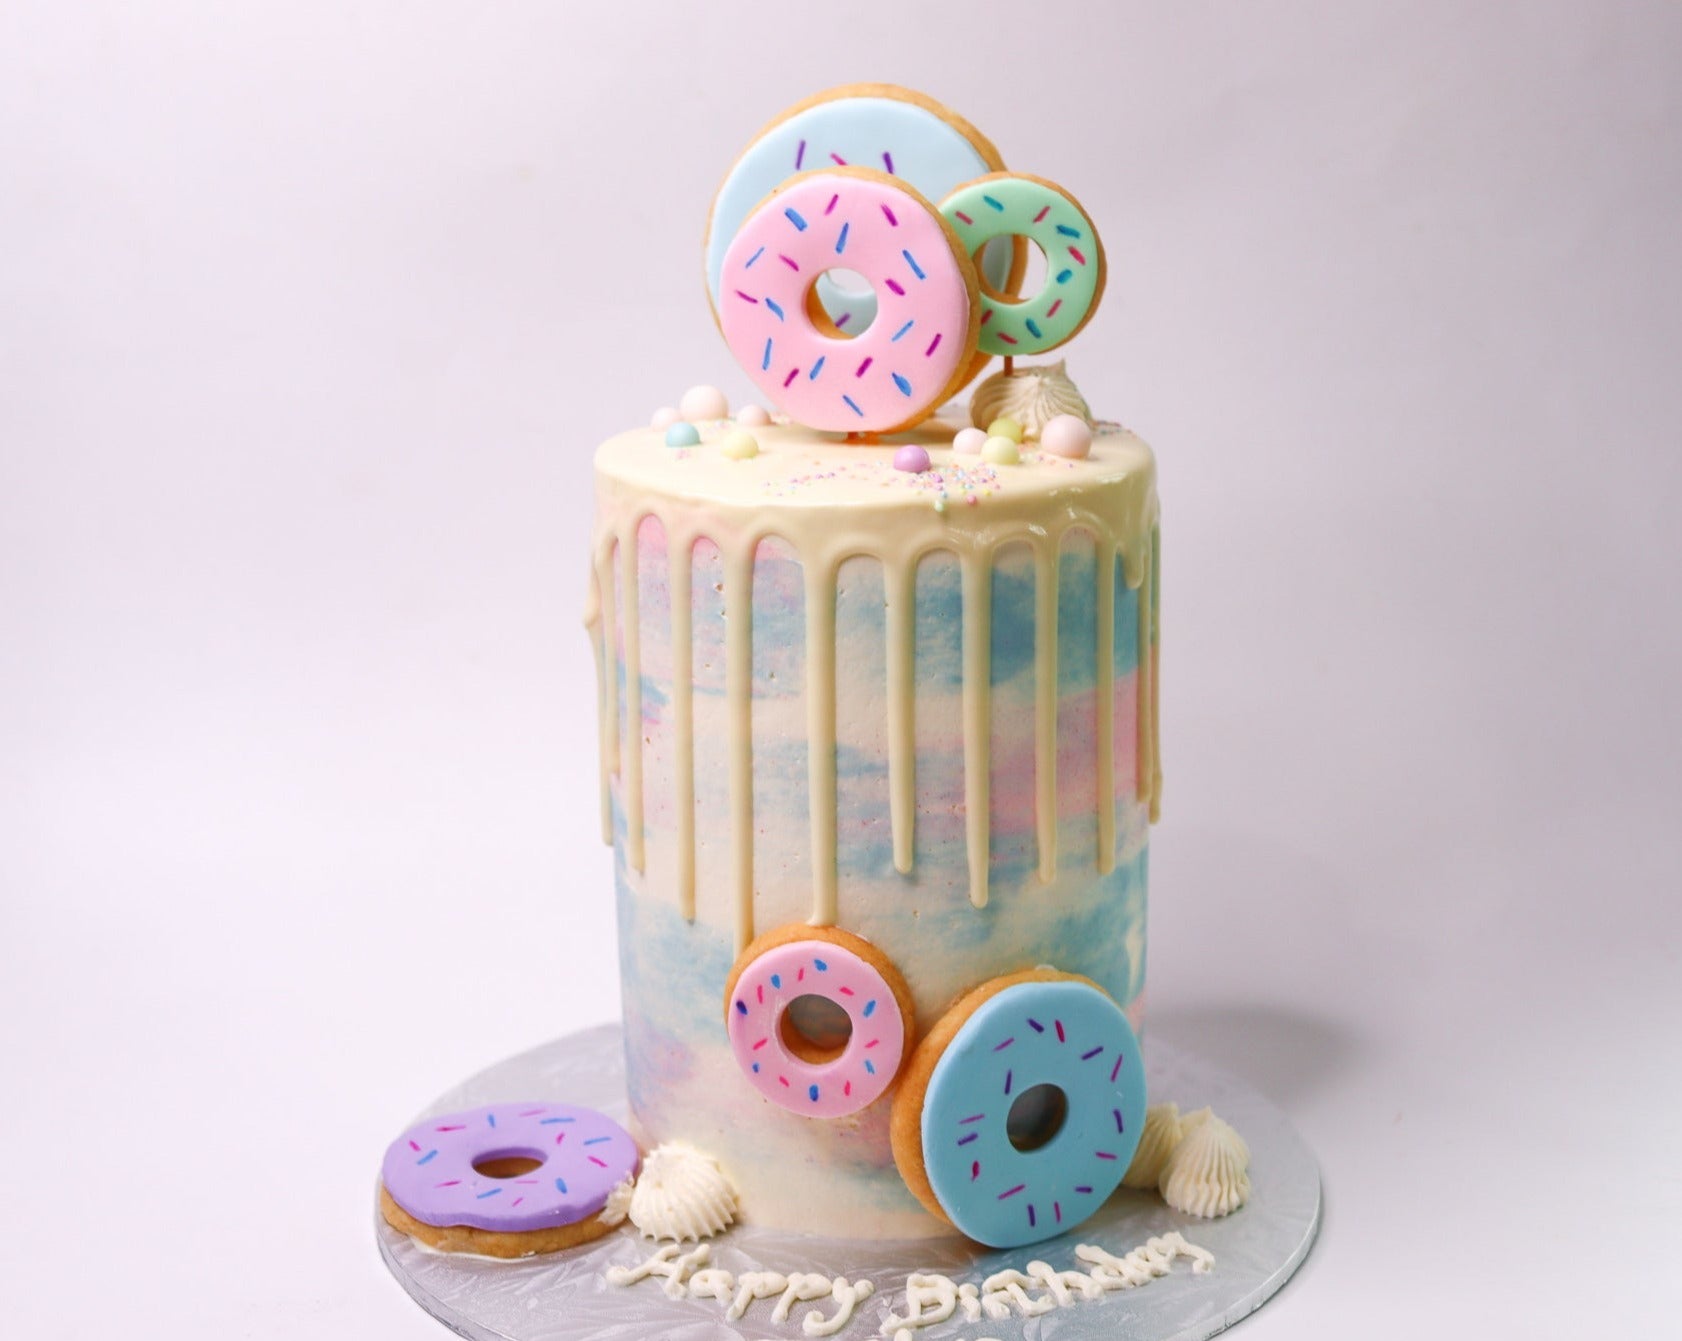 Loaded Donut Drip Cake - CakeCentral.com